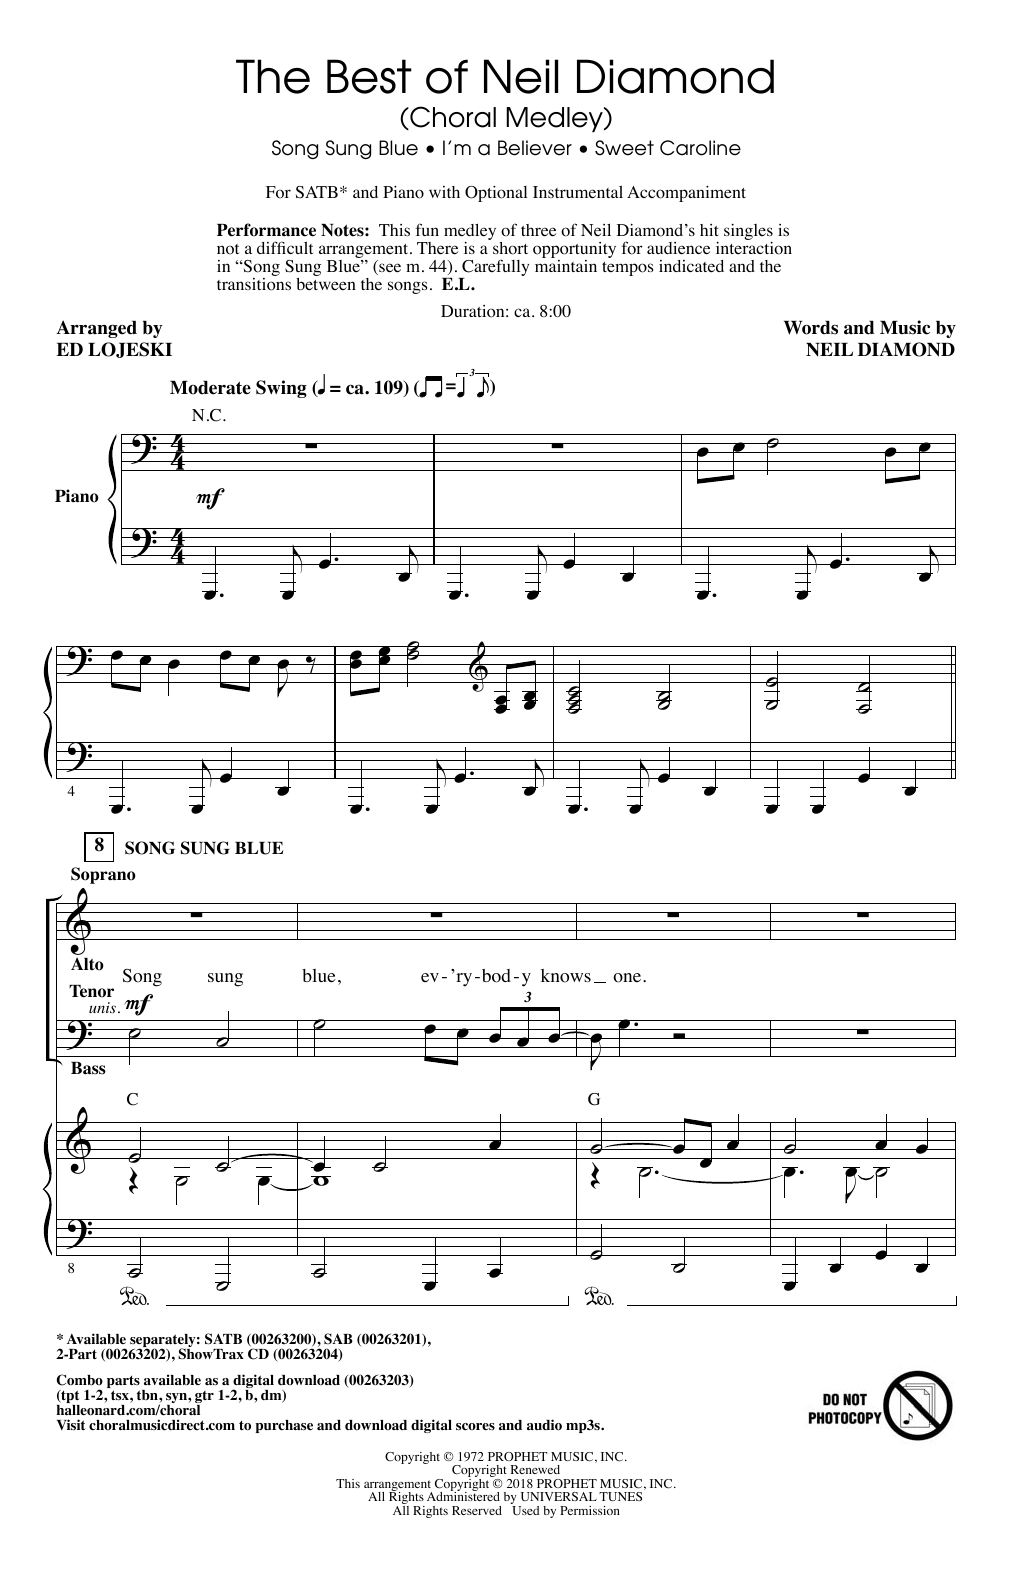 Neil Diamond The Best of Neil Diamond (arr. Ed Lojeski) Sheet Music Notes & Chords for 2-Part Choir - Download or Print PDF